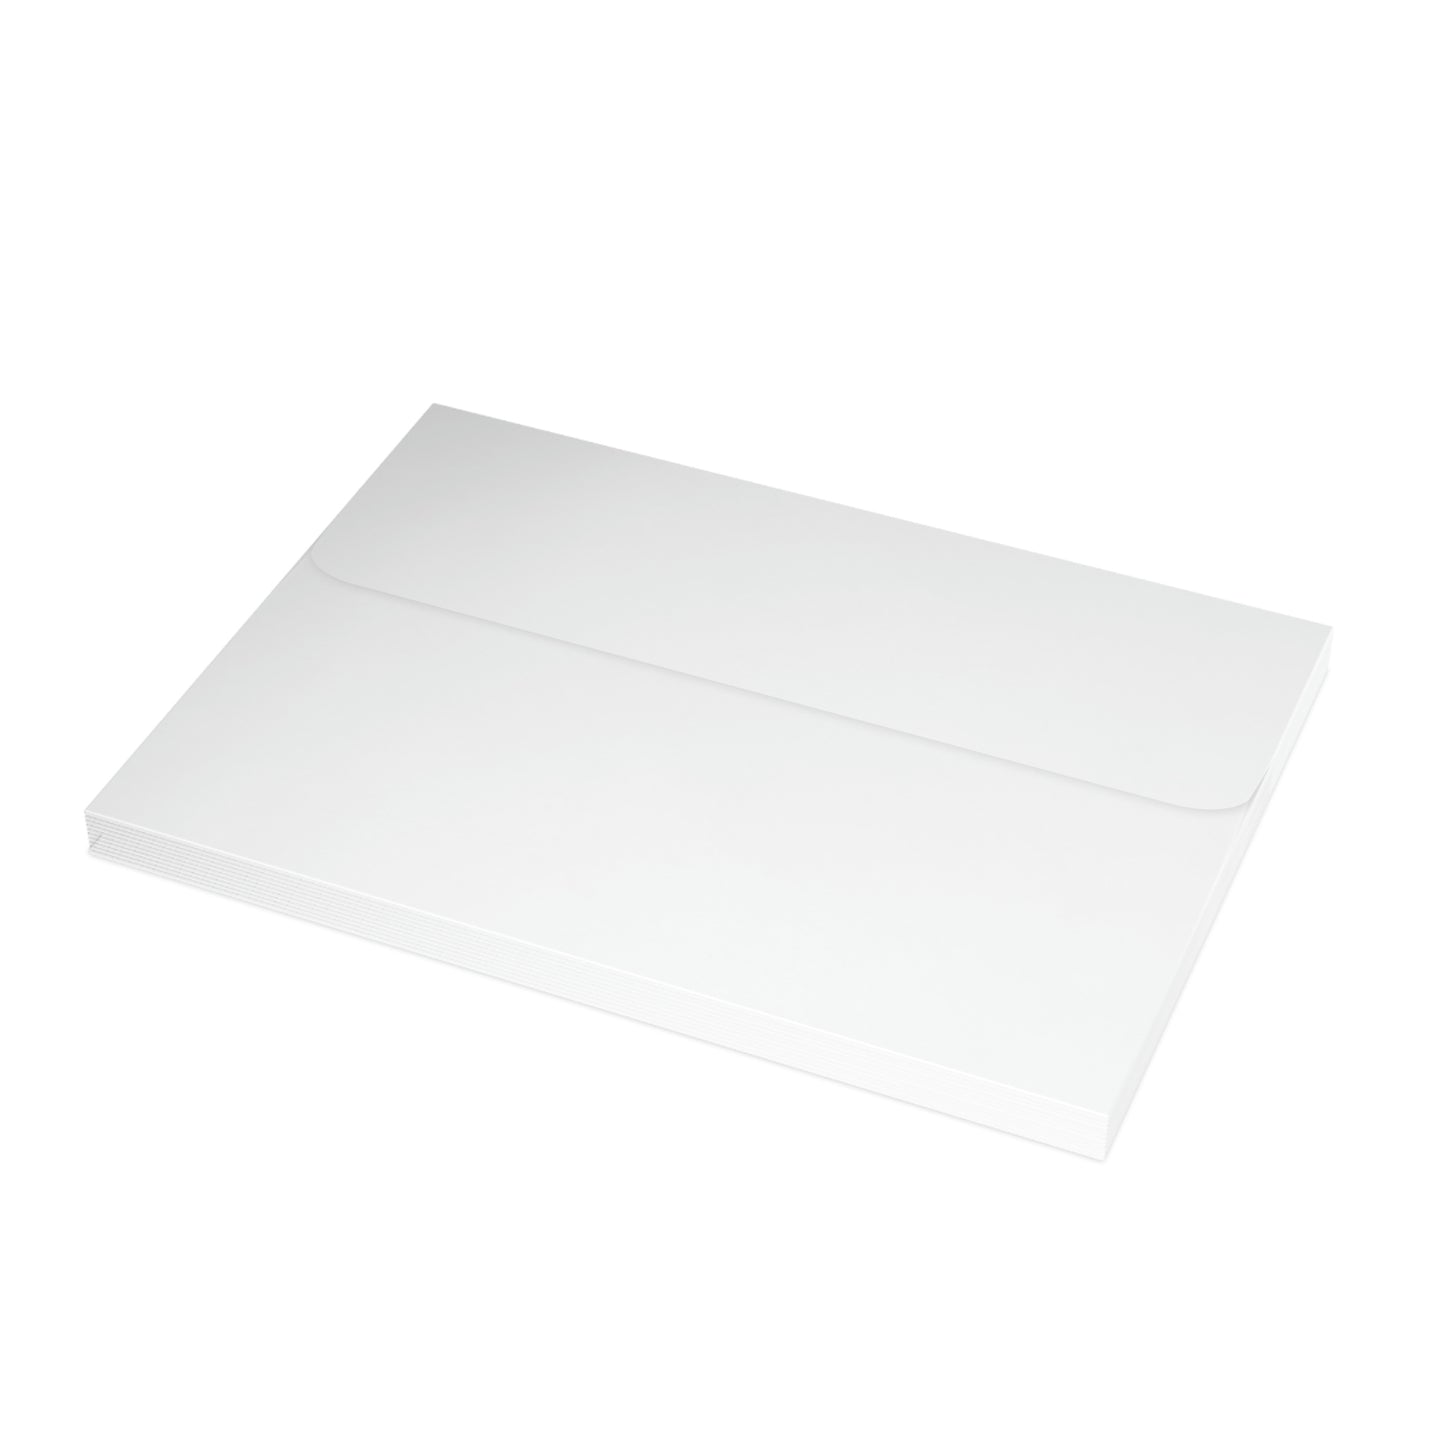 Folded Greeting Cards Horizontal (1, 10, 30, and 50pcs) Calm Down - Design No.700